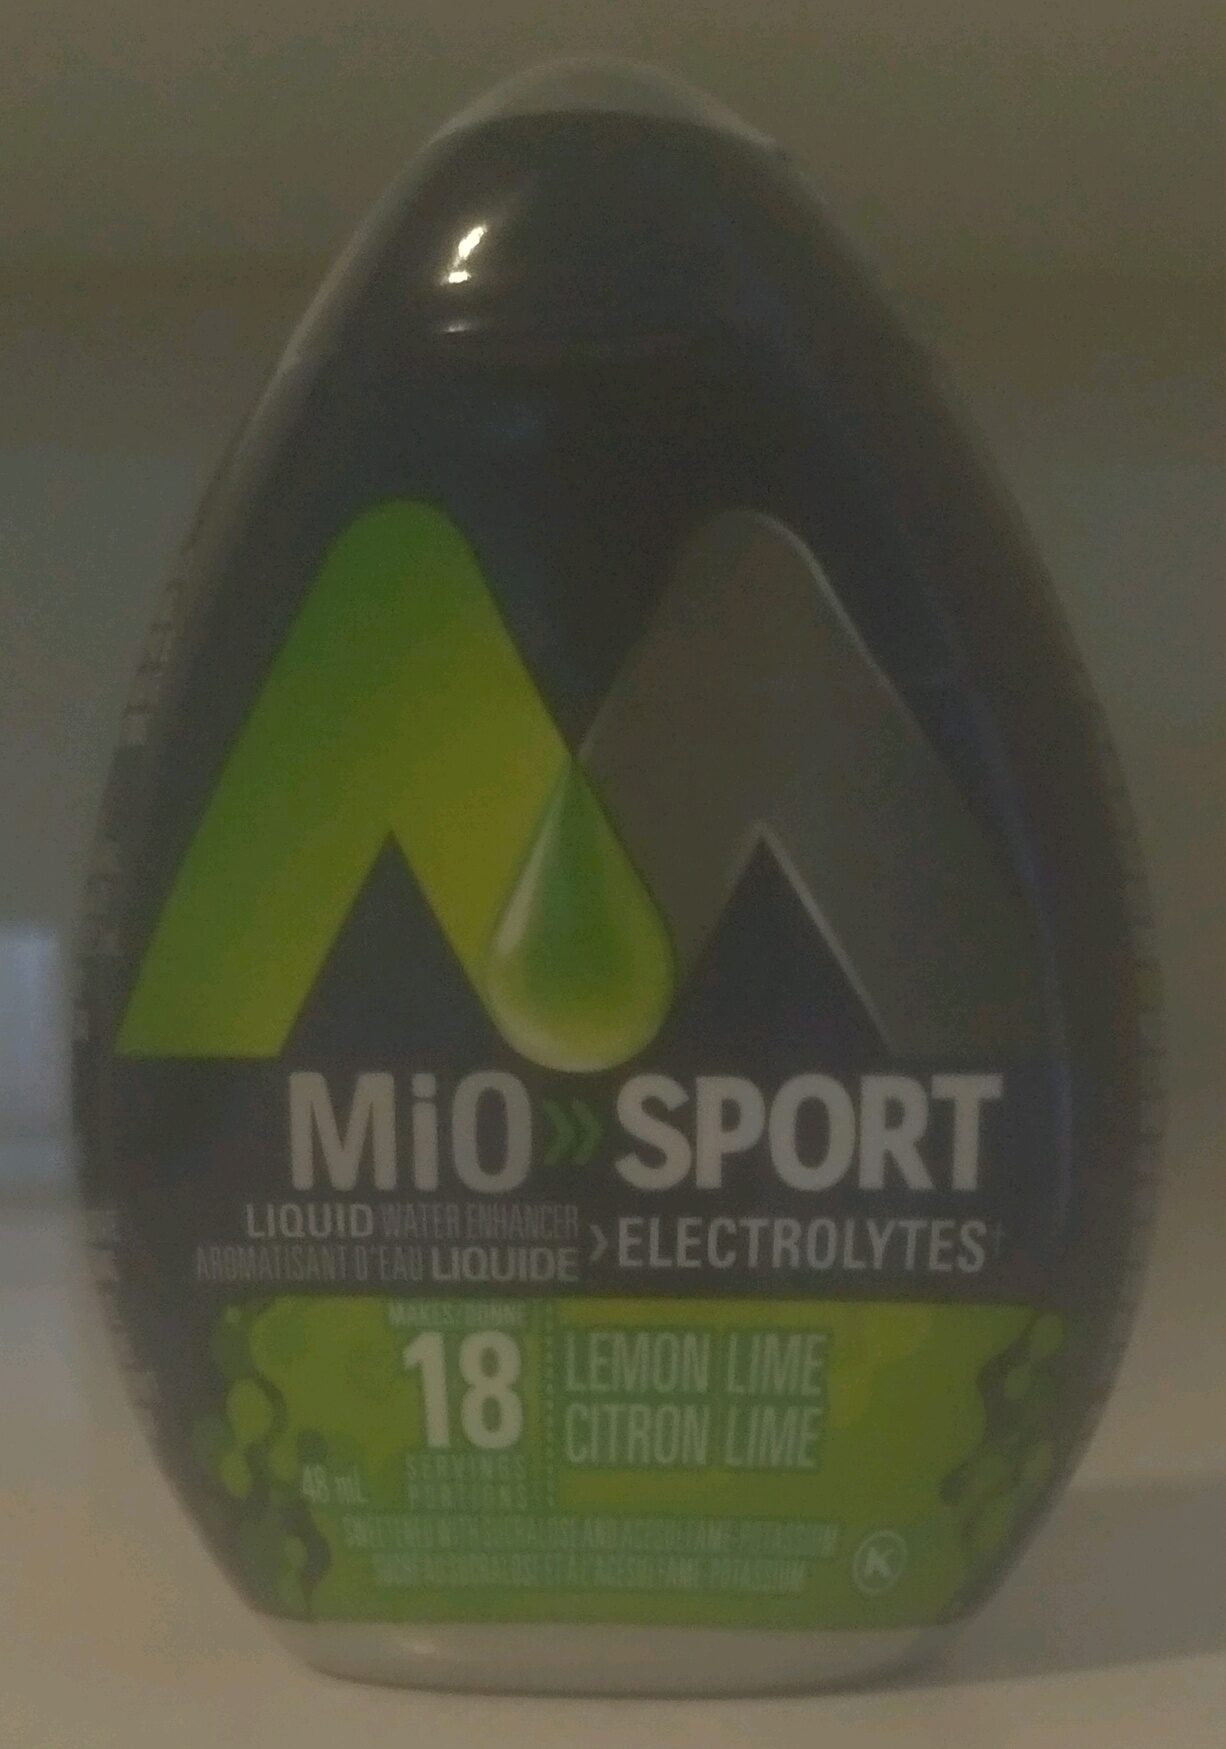 Lemon Lime Liquid Water Enhancer with Electrolytes - Product